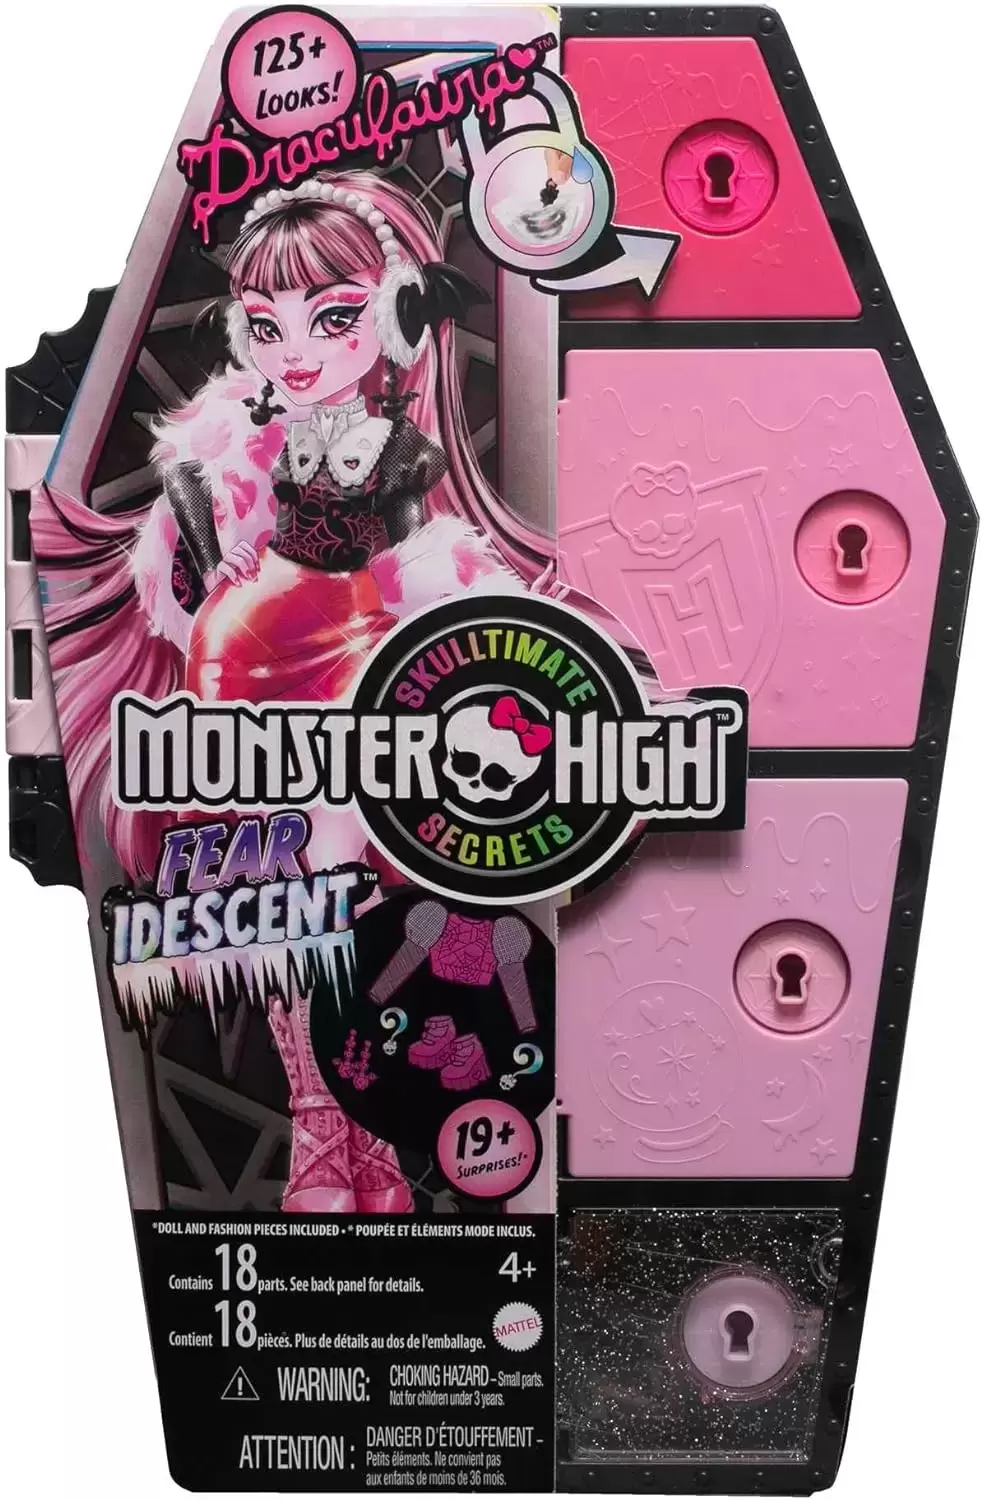 Monster High - Draculaura Skulltimate Secrets - Fear Idescent